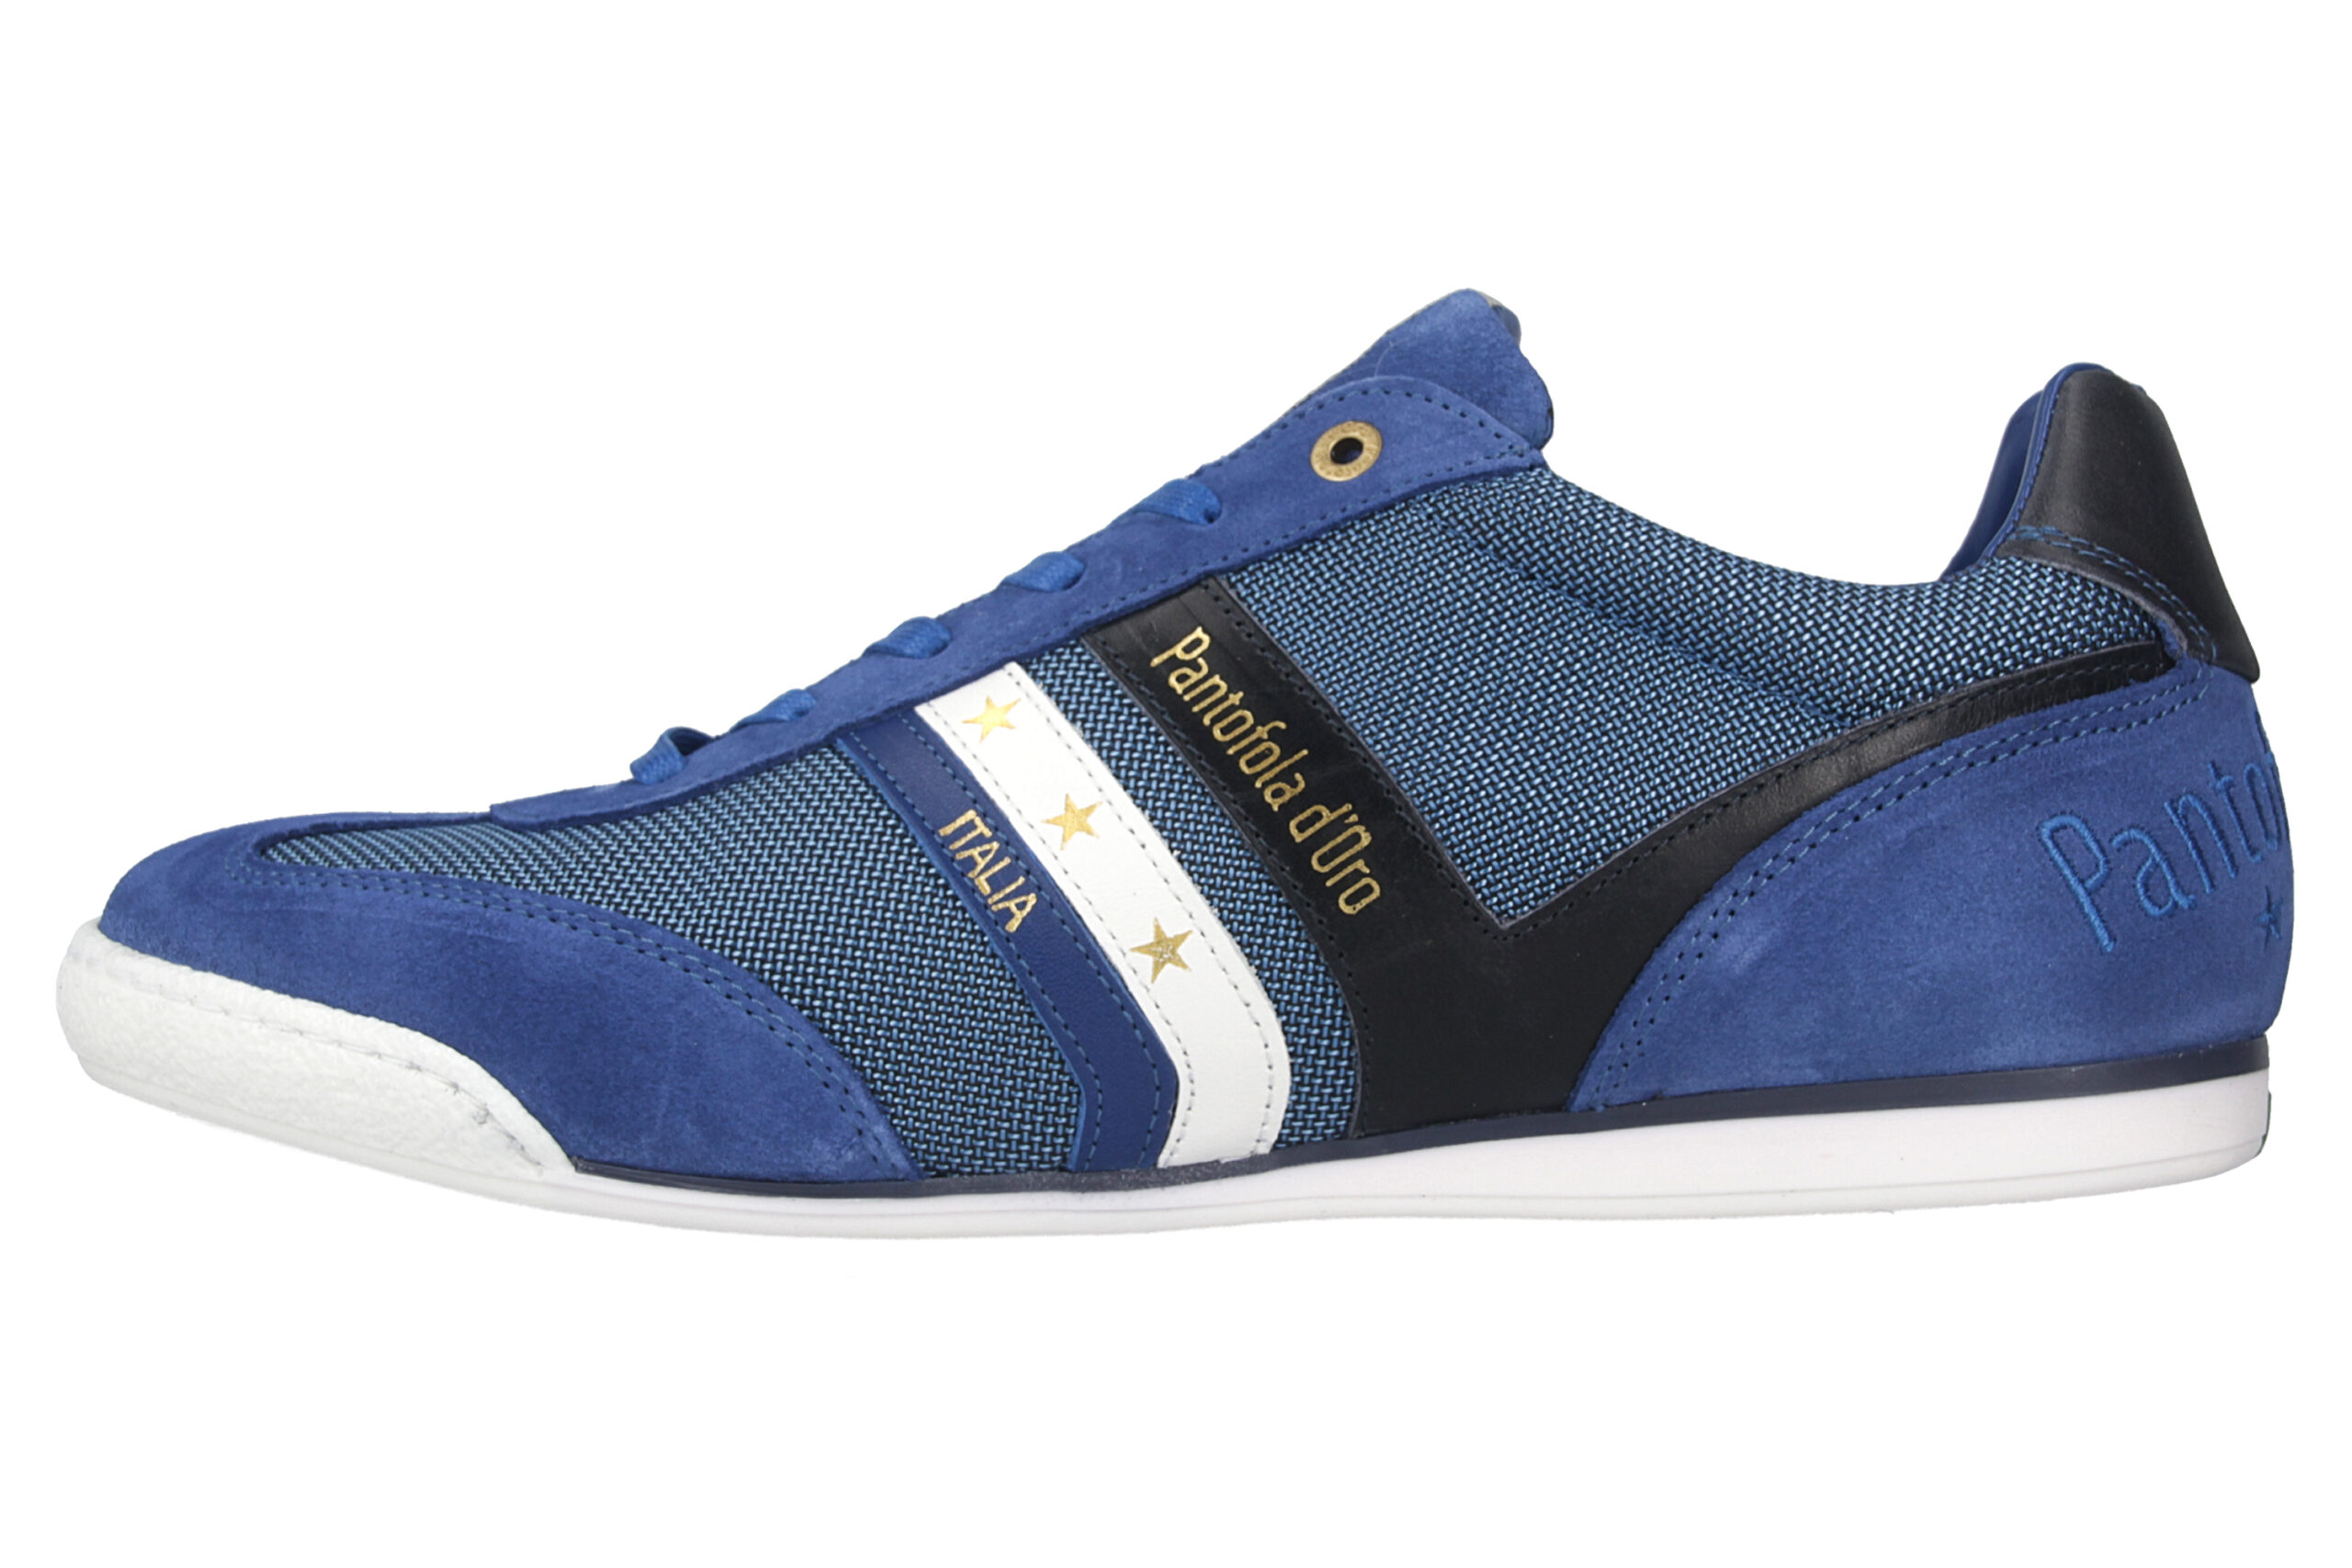 Pantofola d'Oro Vasto NB Uomo Low Sneaker in Übergrößen Blau 10201046.HFQ/10201072.HFQ große Herrenschuhe